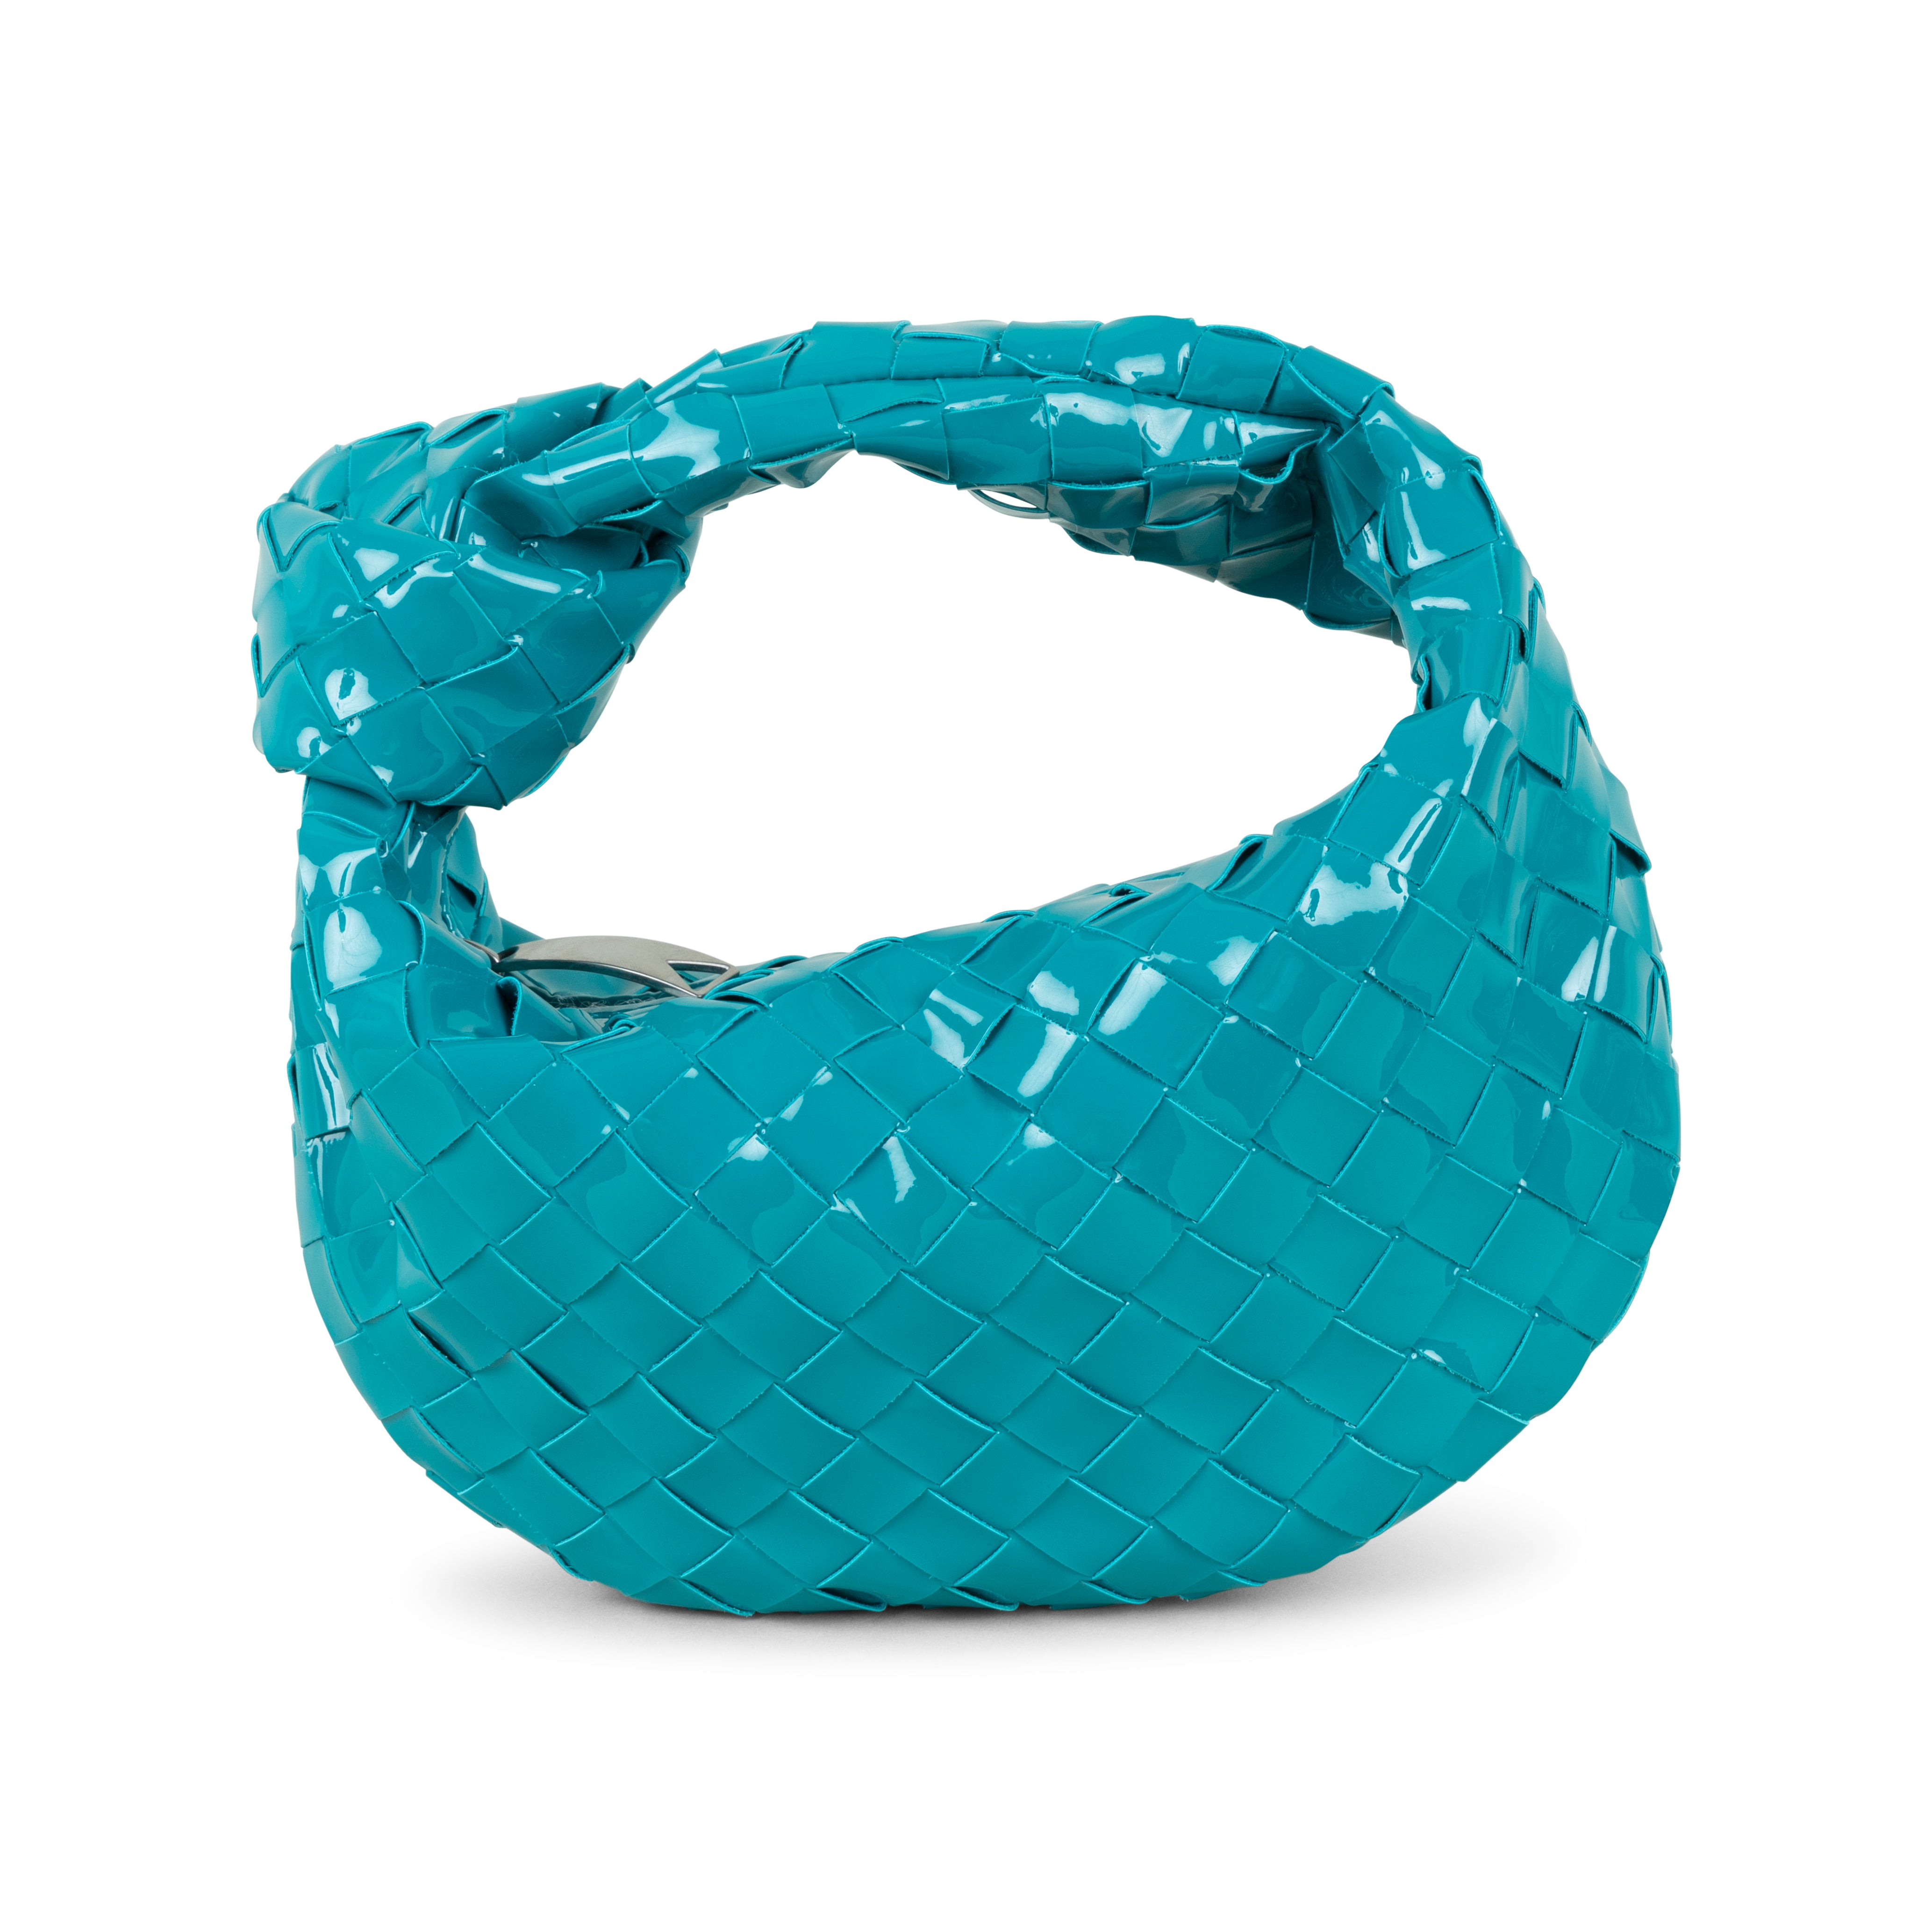 ⌜unboxing⌝ LOEWE Small Square Basket bag in raffia ⎹ mod shots 